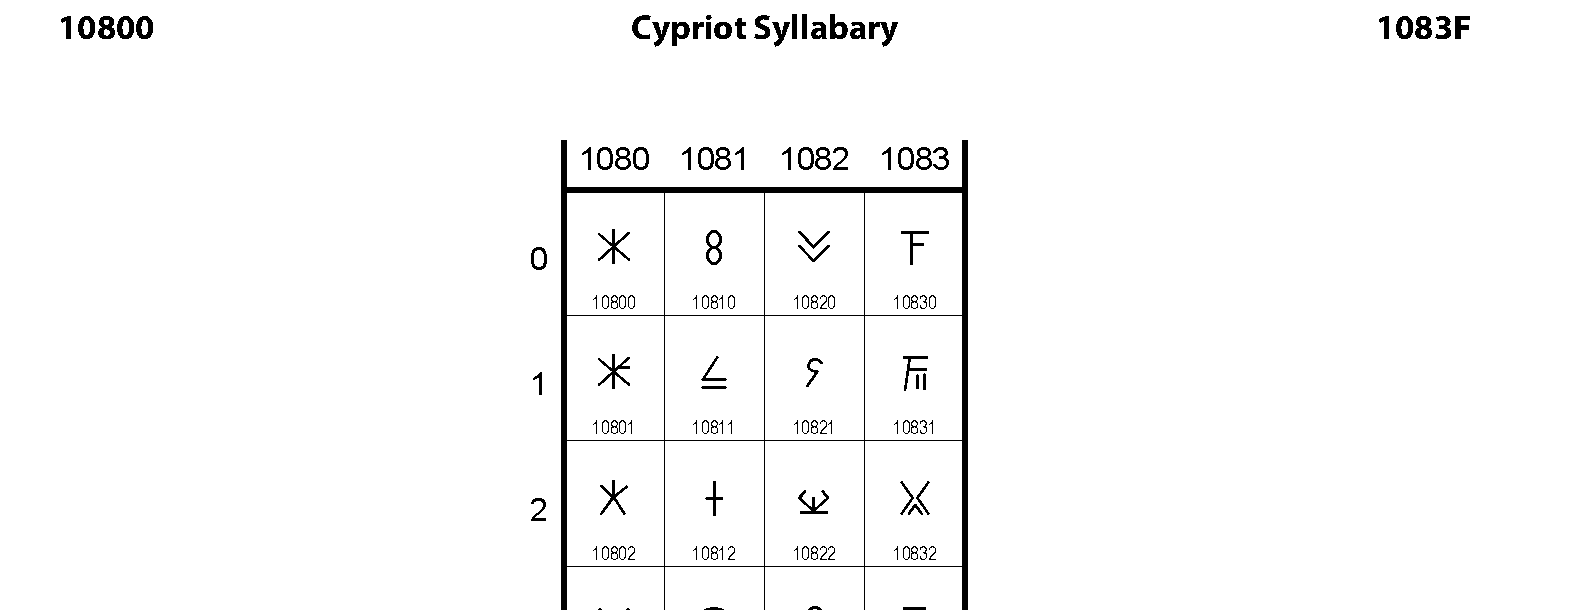 Unicode - Cypriot Syllabary